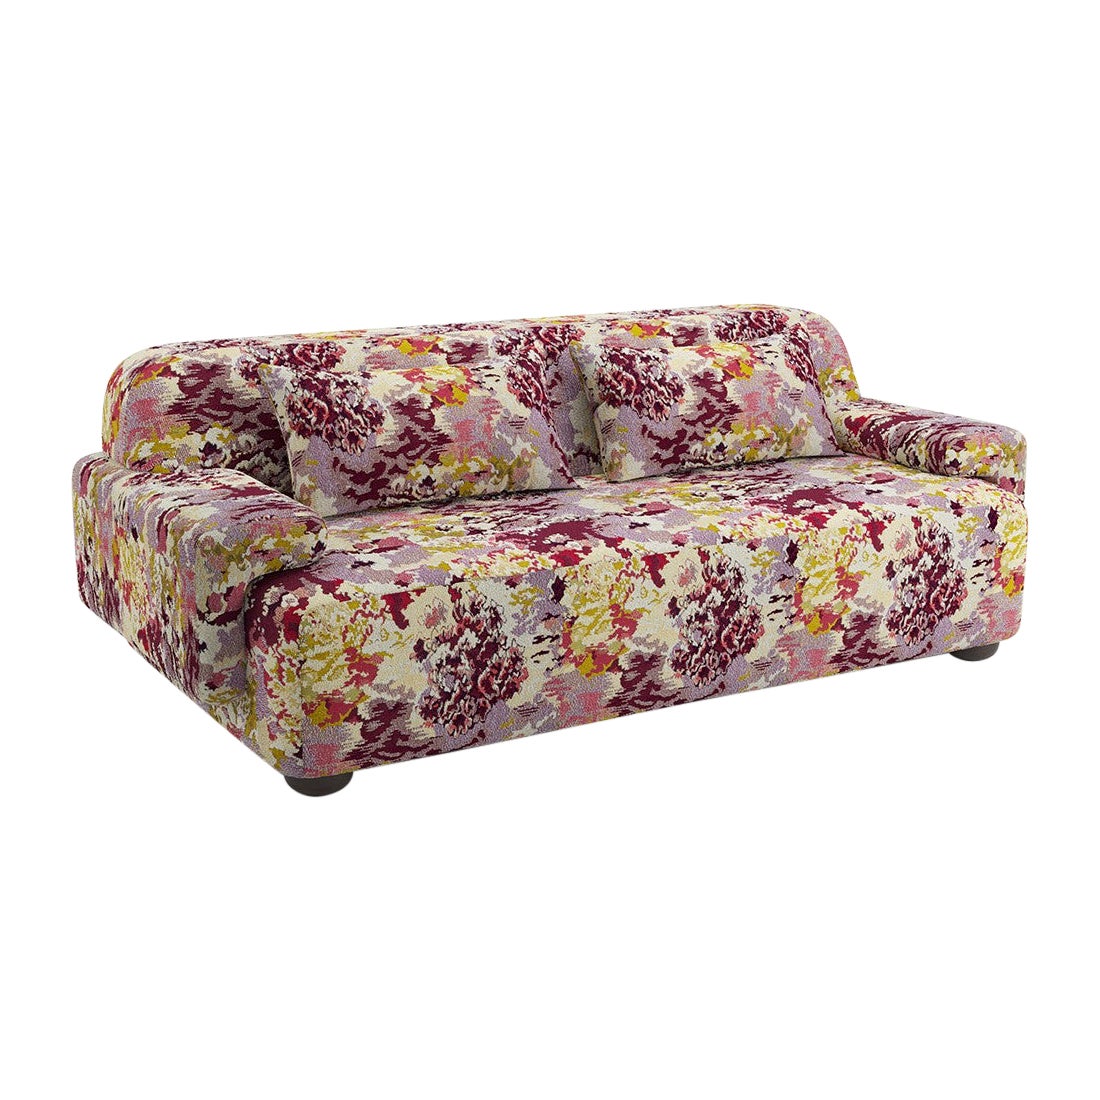 Popus Editions Lena 2.5 Seater Sofa in Shiraz Marrakech Jacquard Upholstery